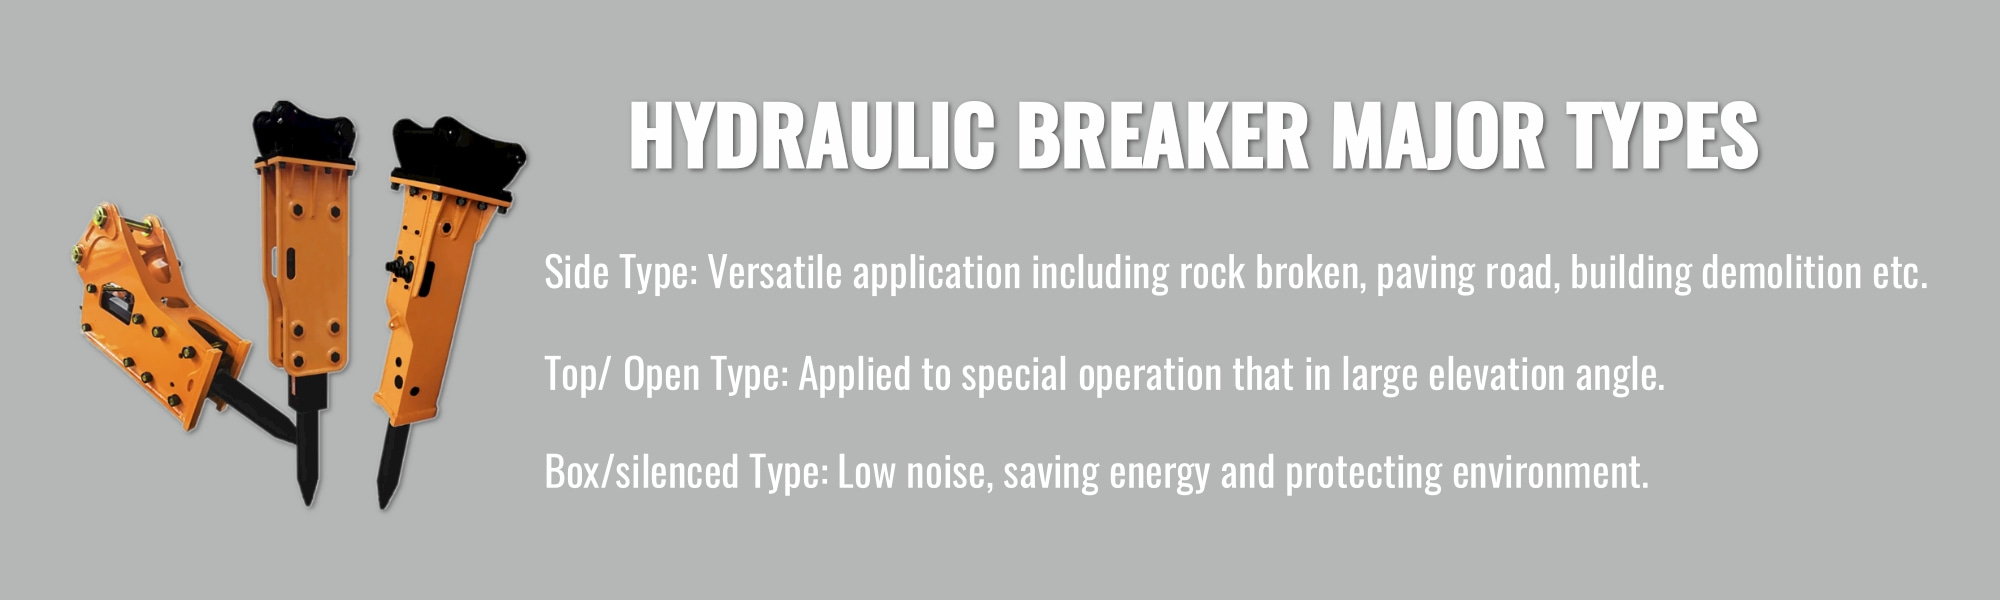 Types of hydraulic breaker hammer